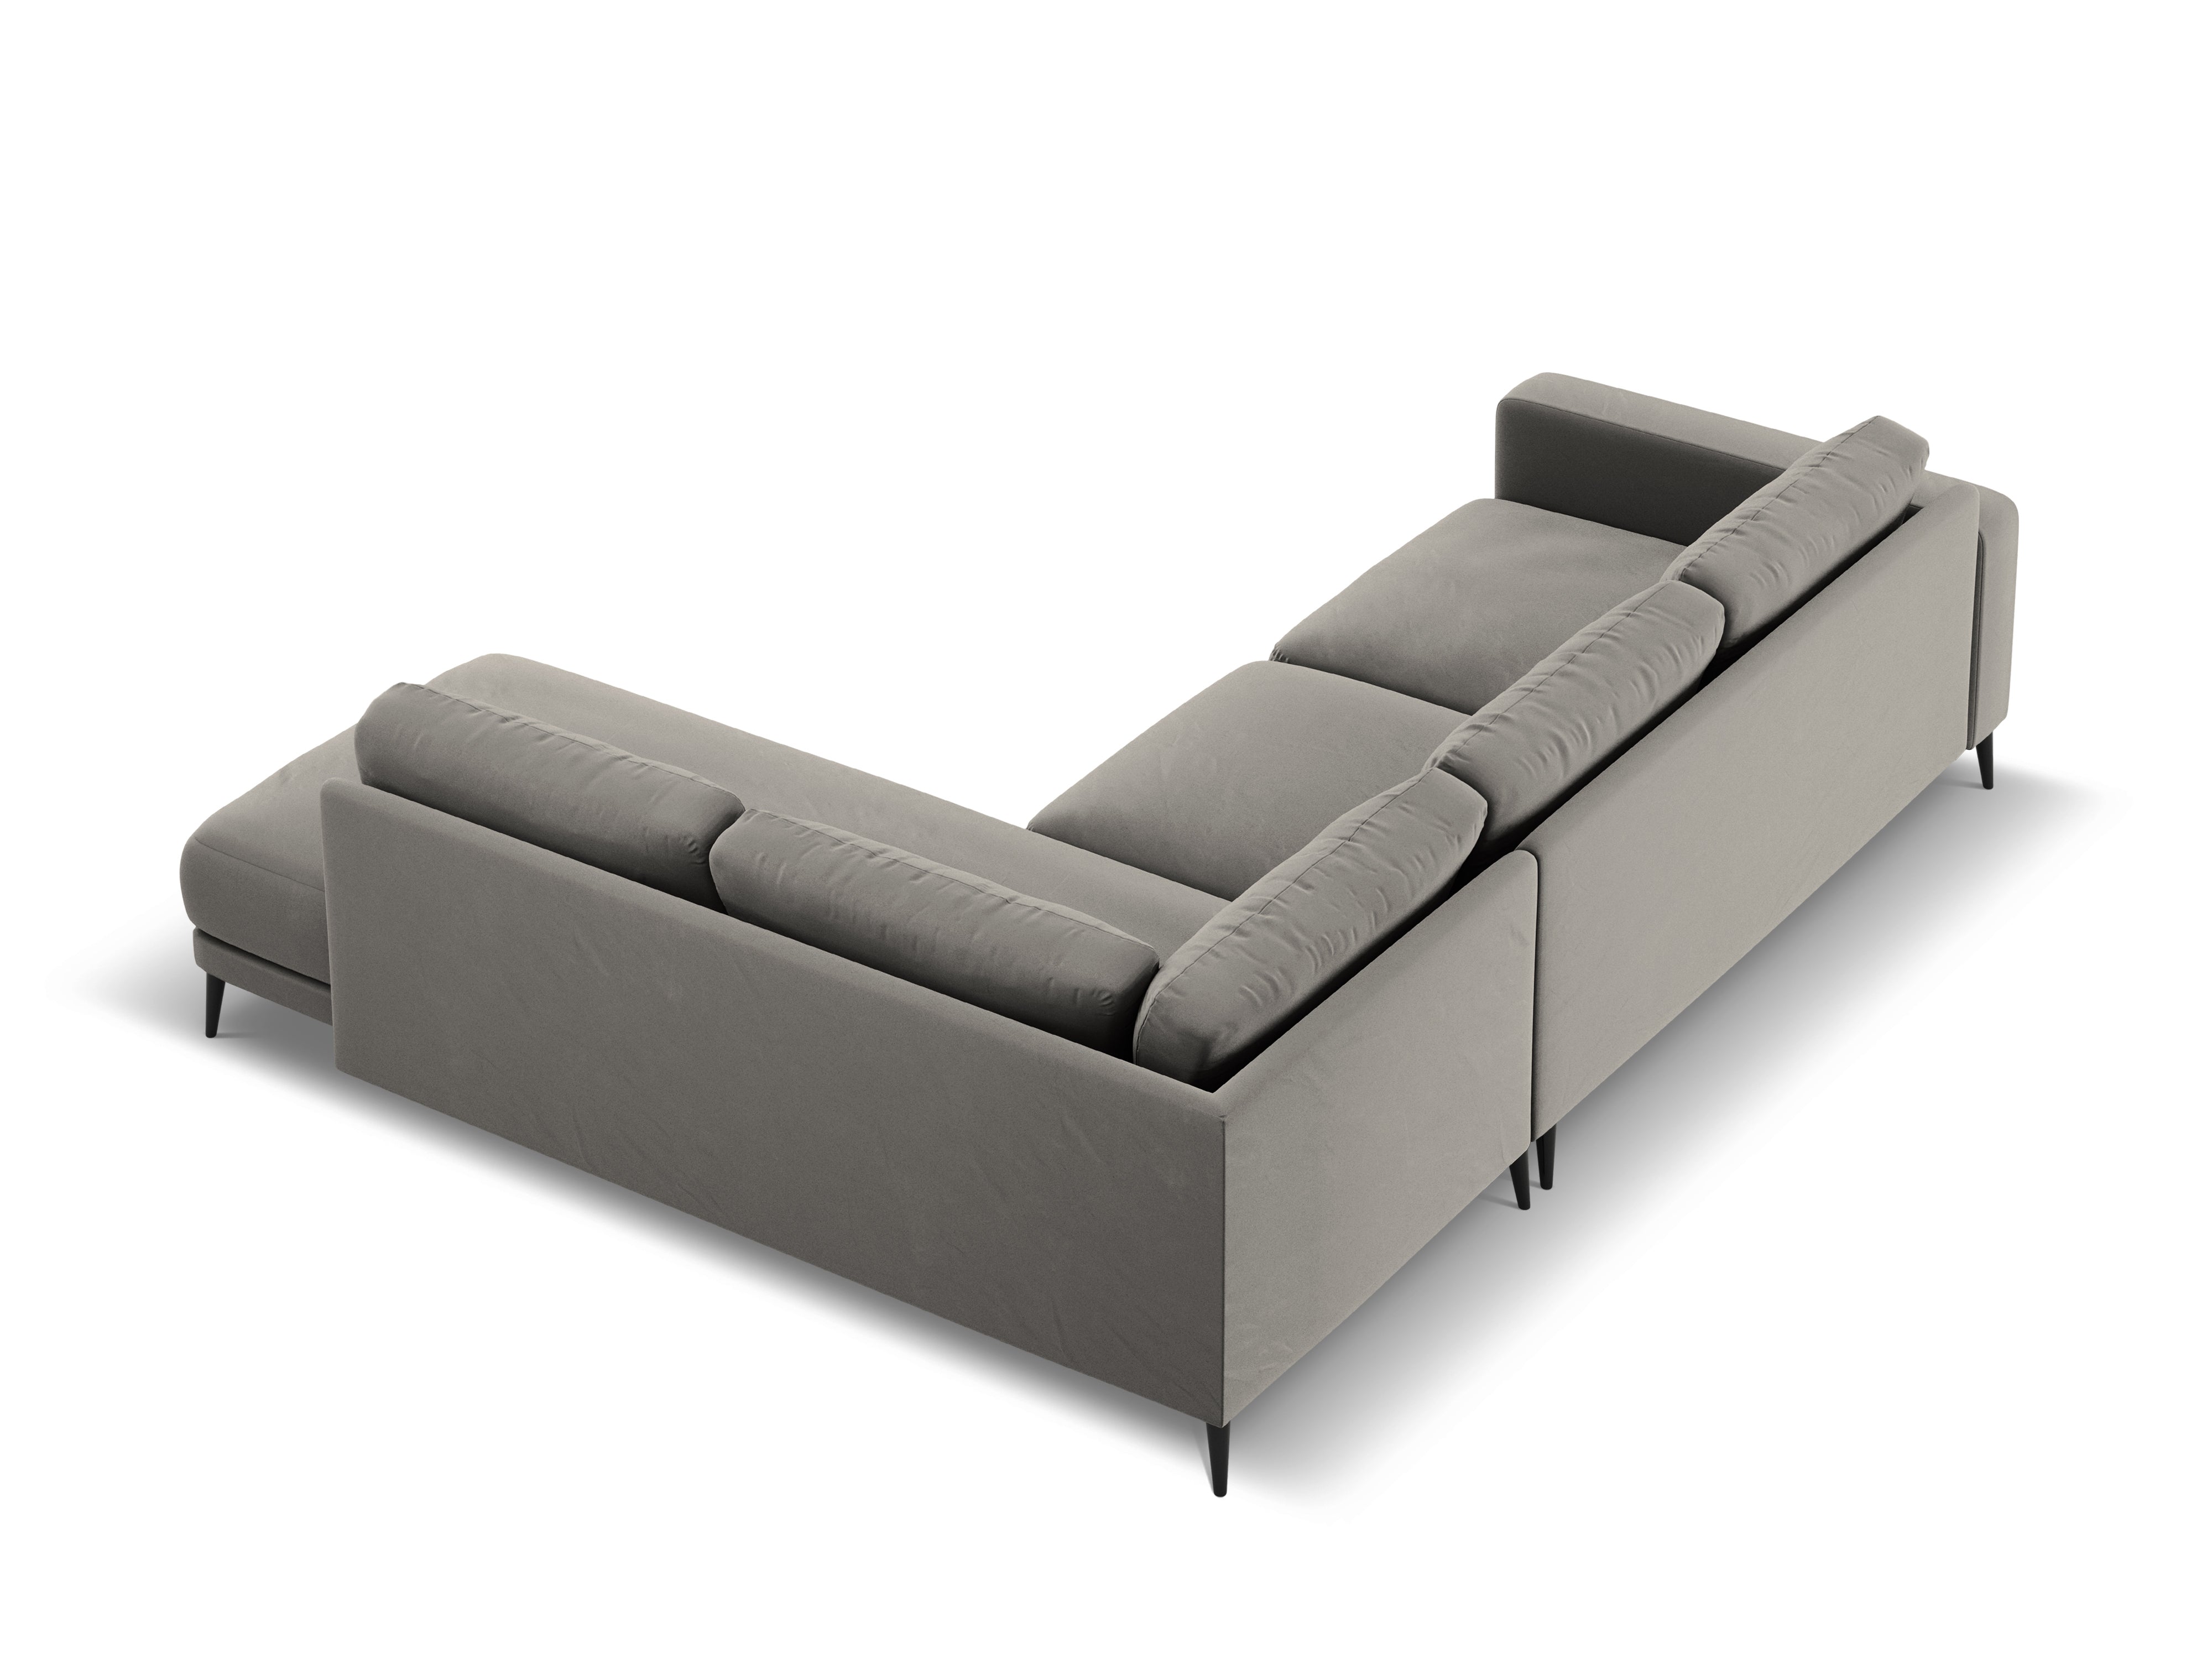 Velvet Right Corner Sofa, "Kylie", 4 Seats, 251x185x80
Made in Europe, Micadoni, Eye on Design